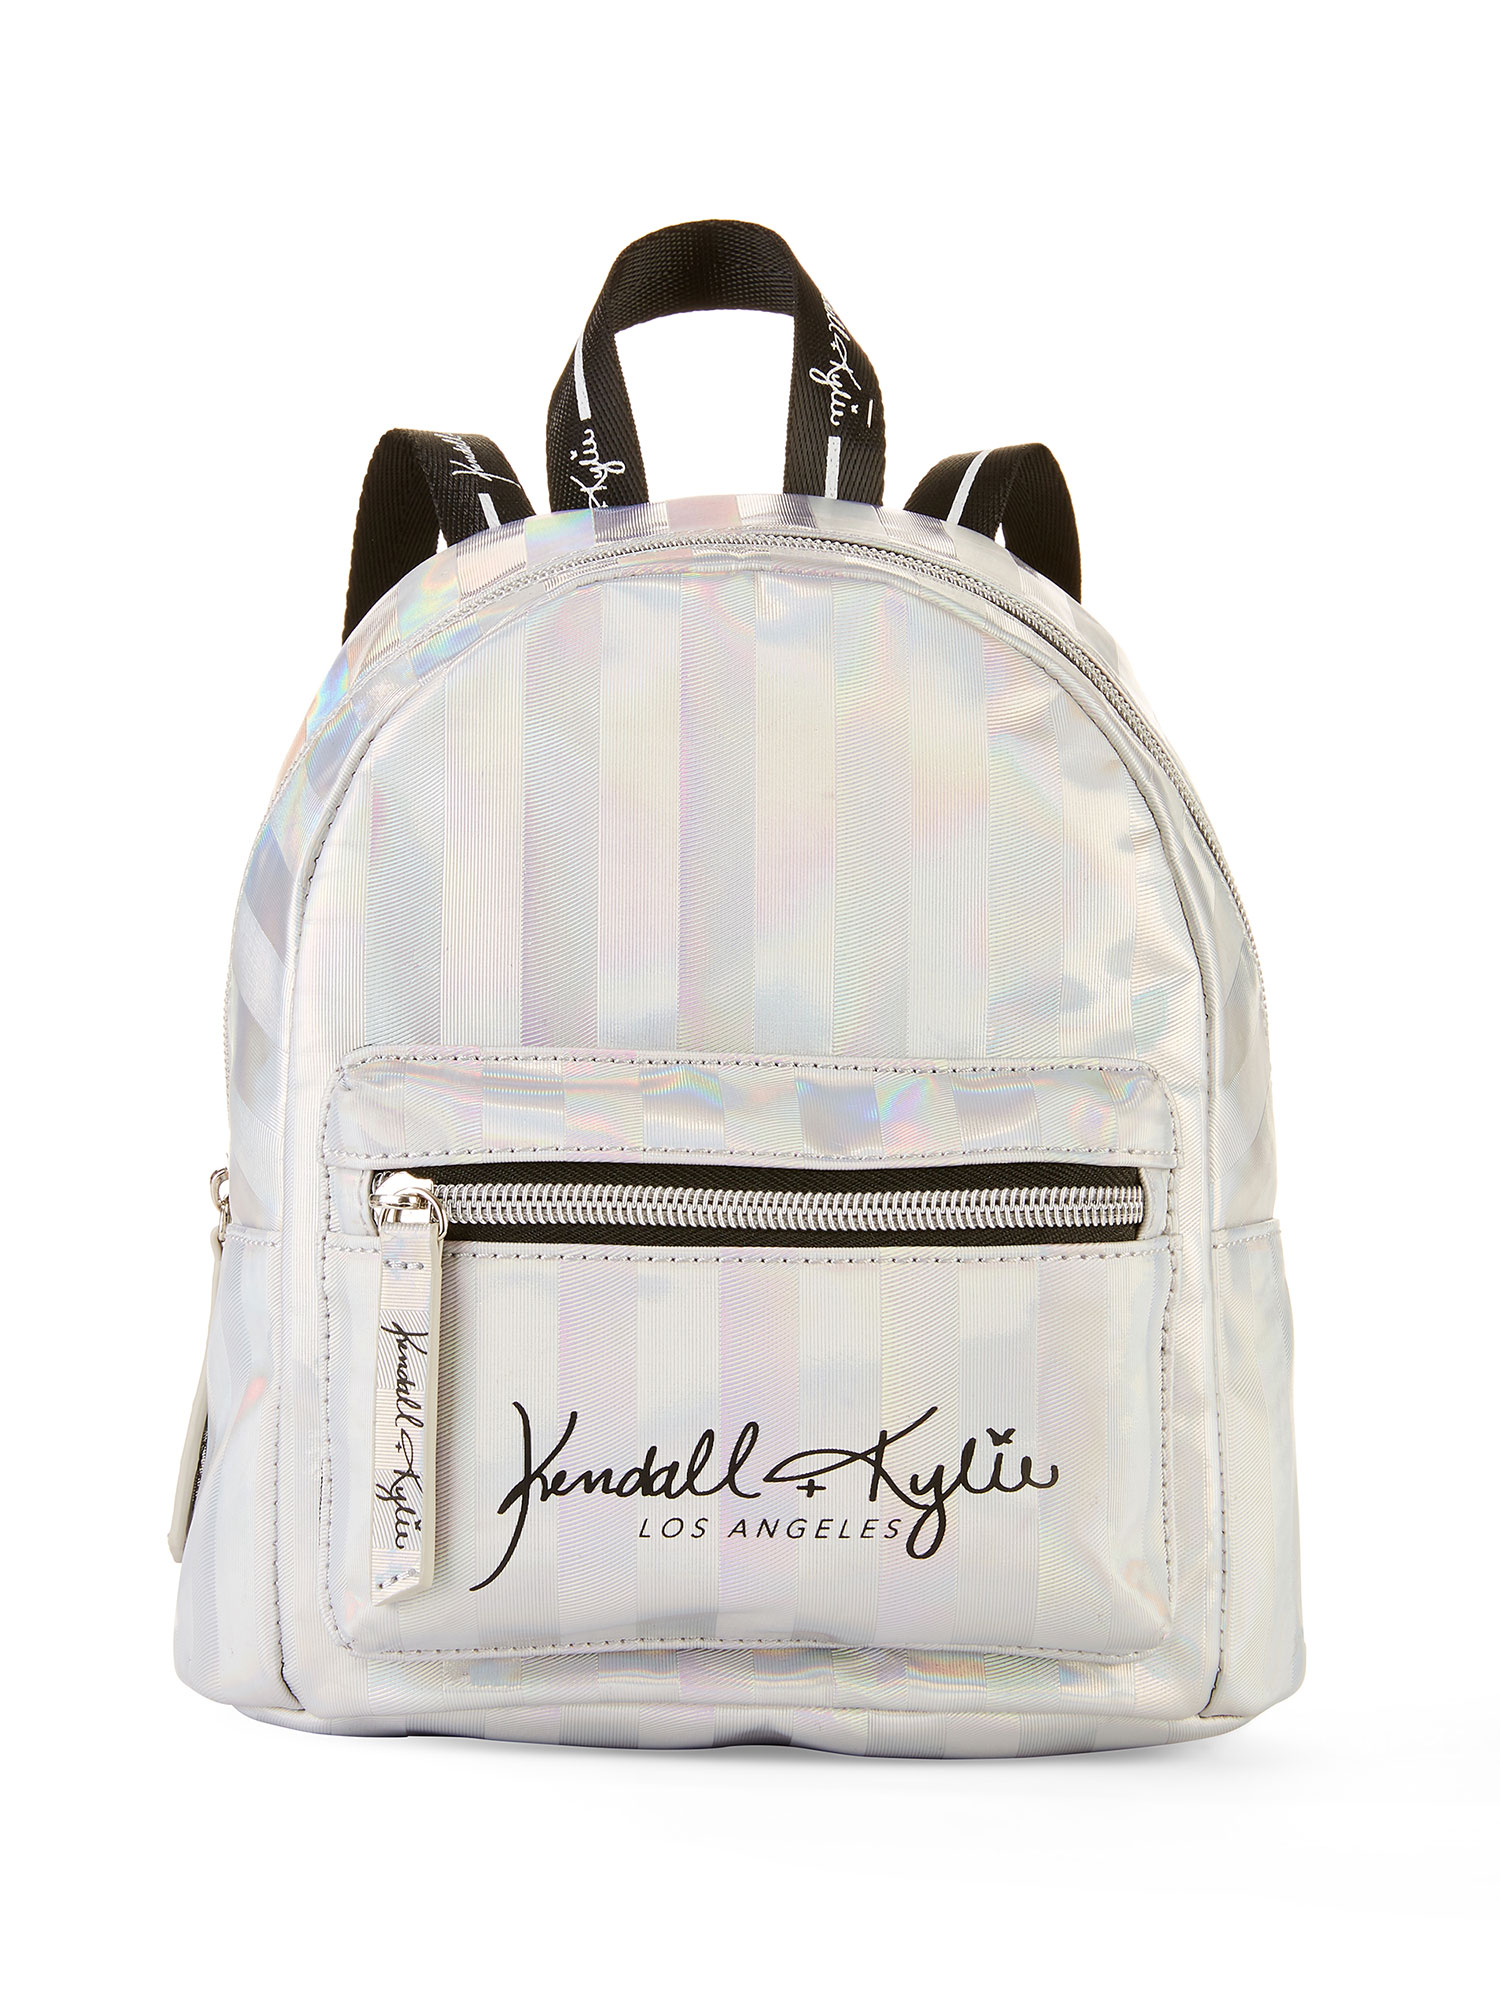 NWT Kendall & Kylie Jenner Vegan Leather Backpack black w/ white lettering  | eBay